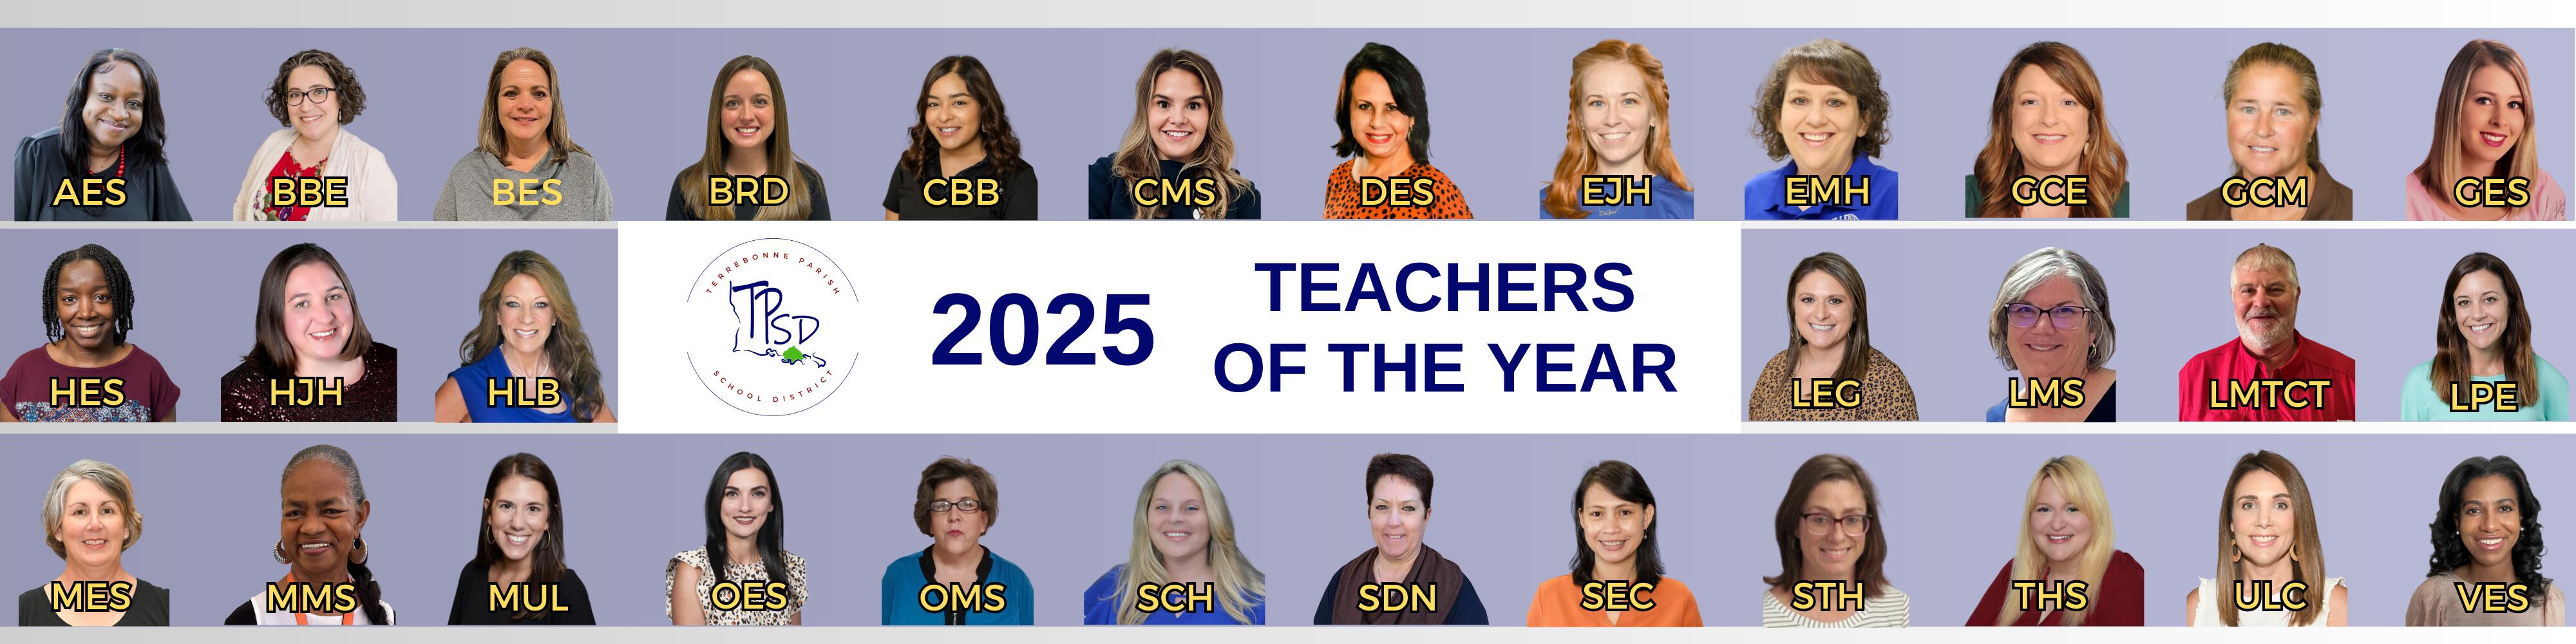 2025 Teachers of the Year